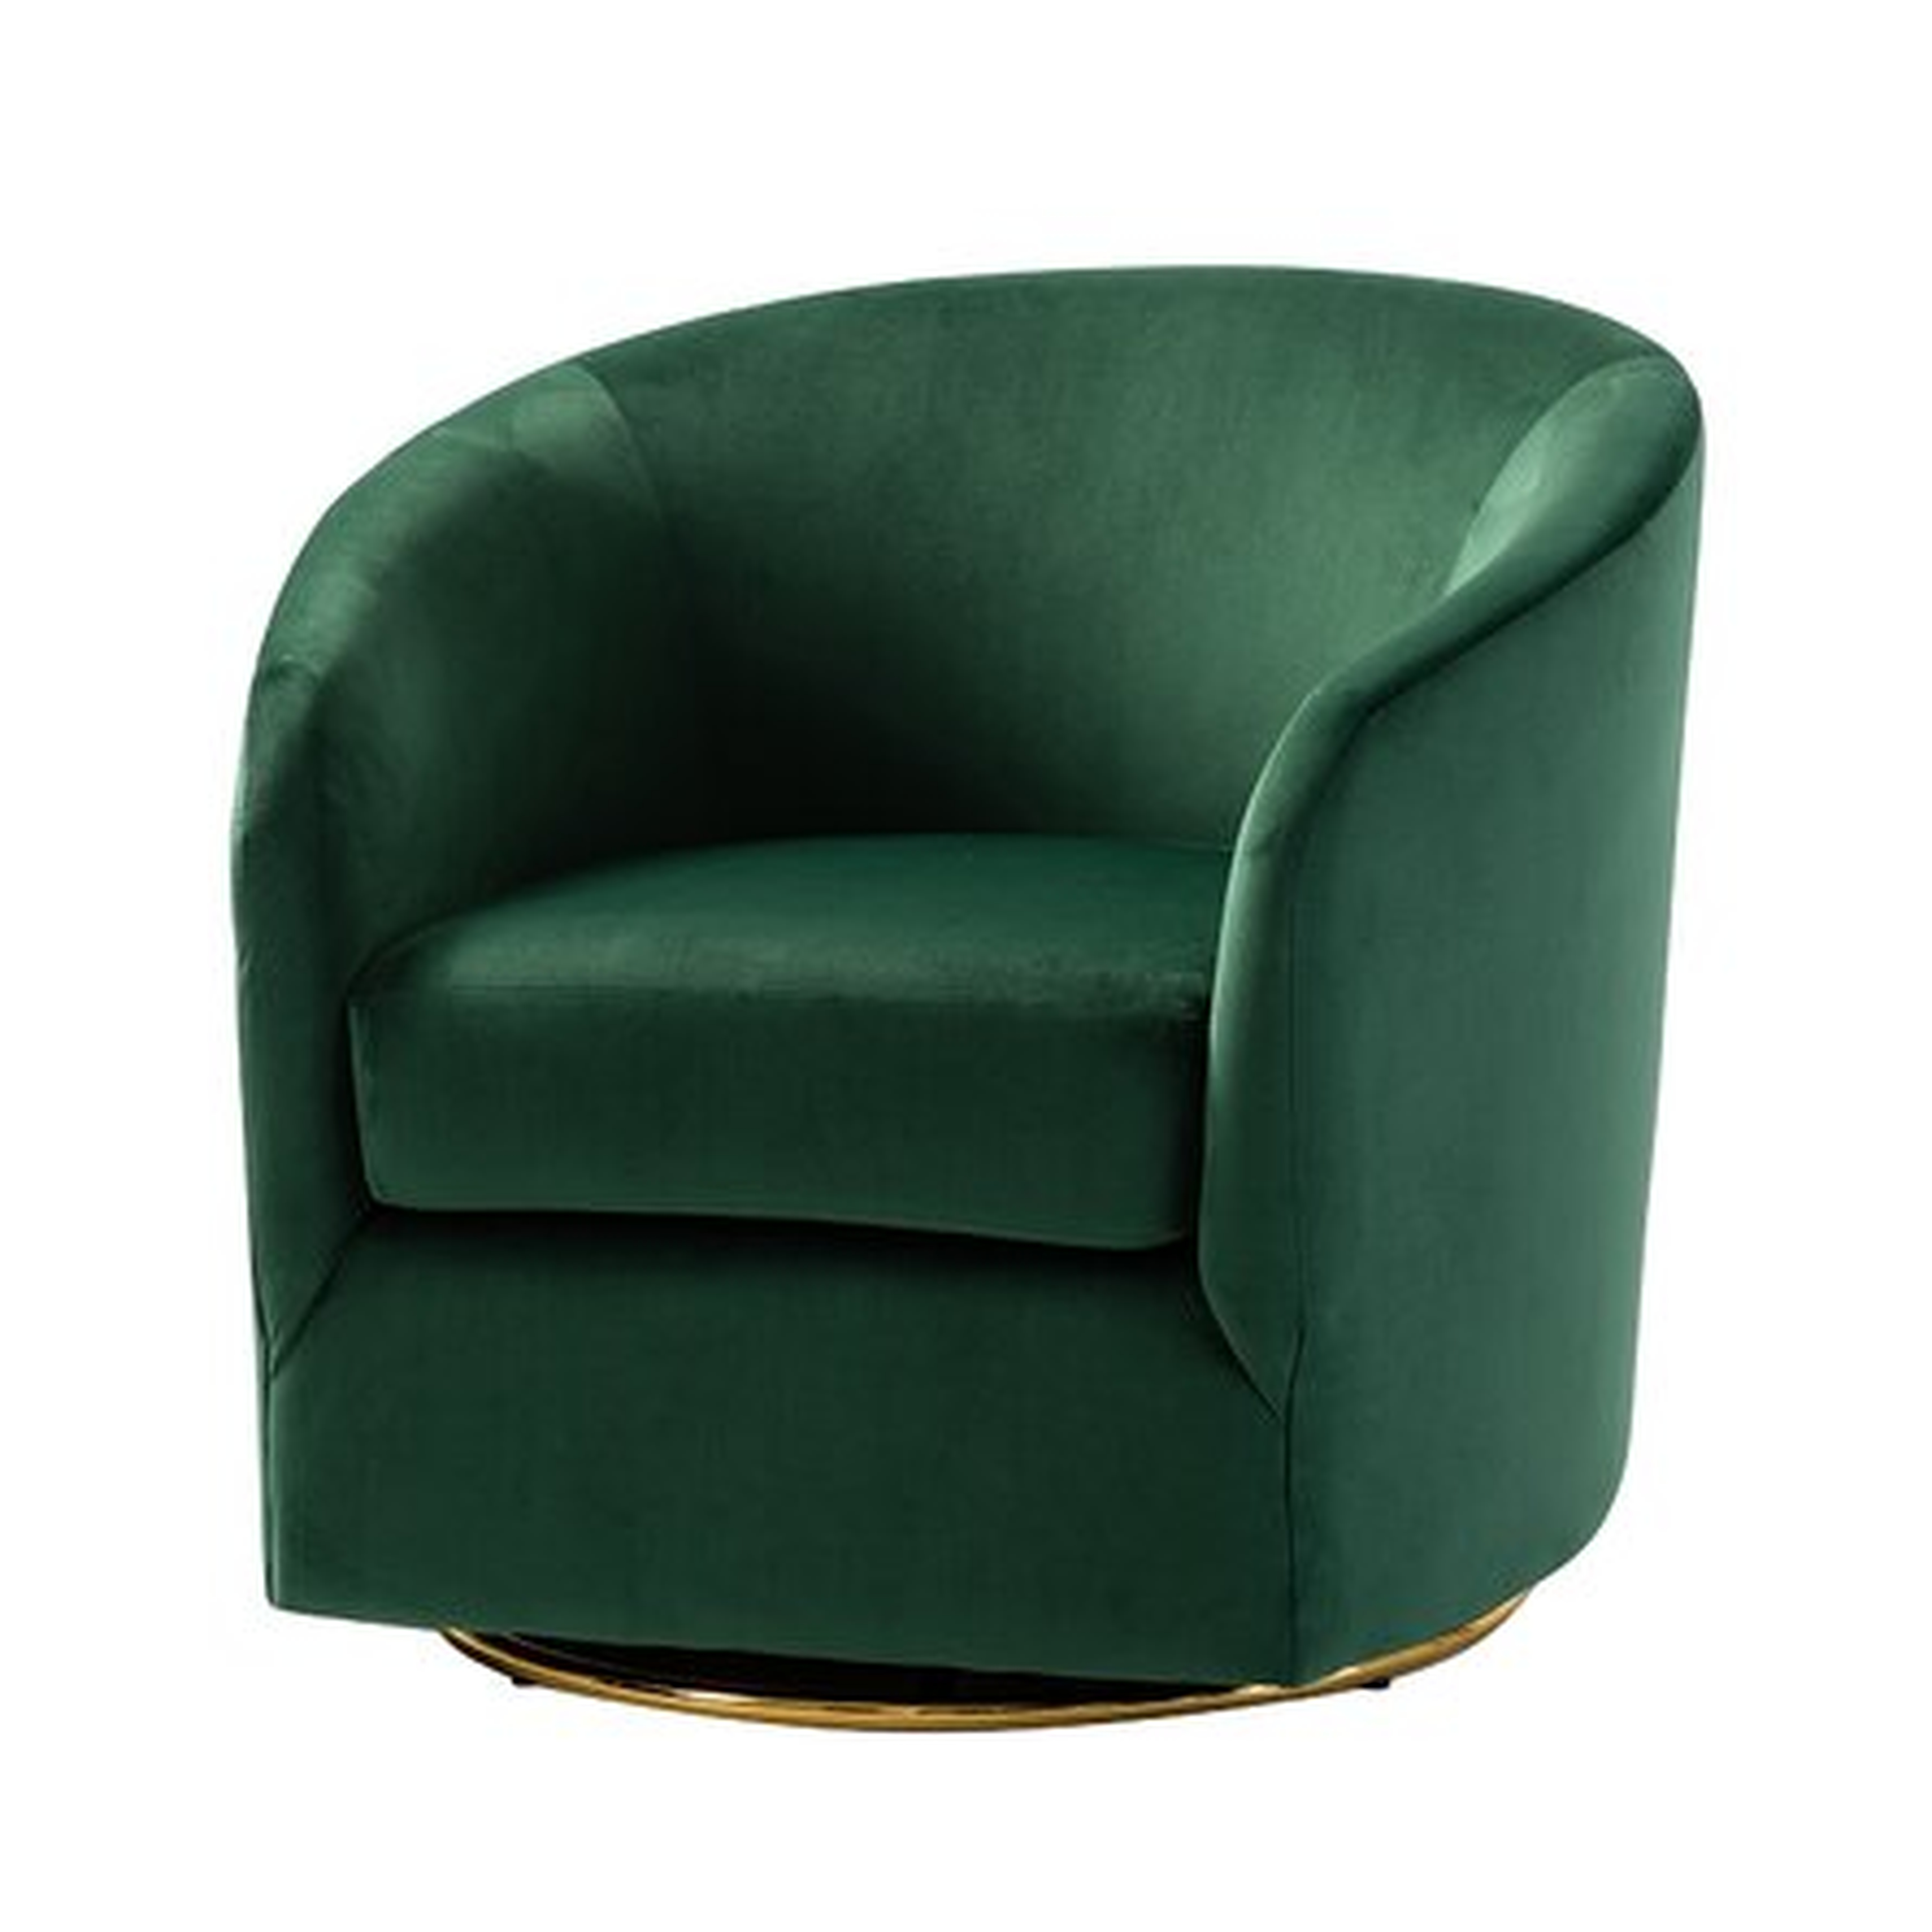 Adnand Swivel Chair With Metal Base, Green - Wayfair